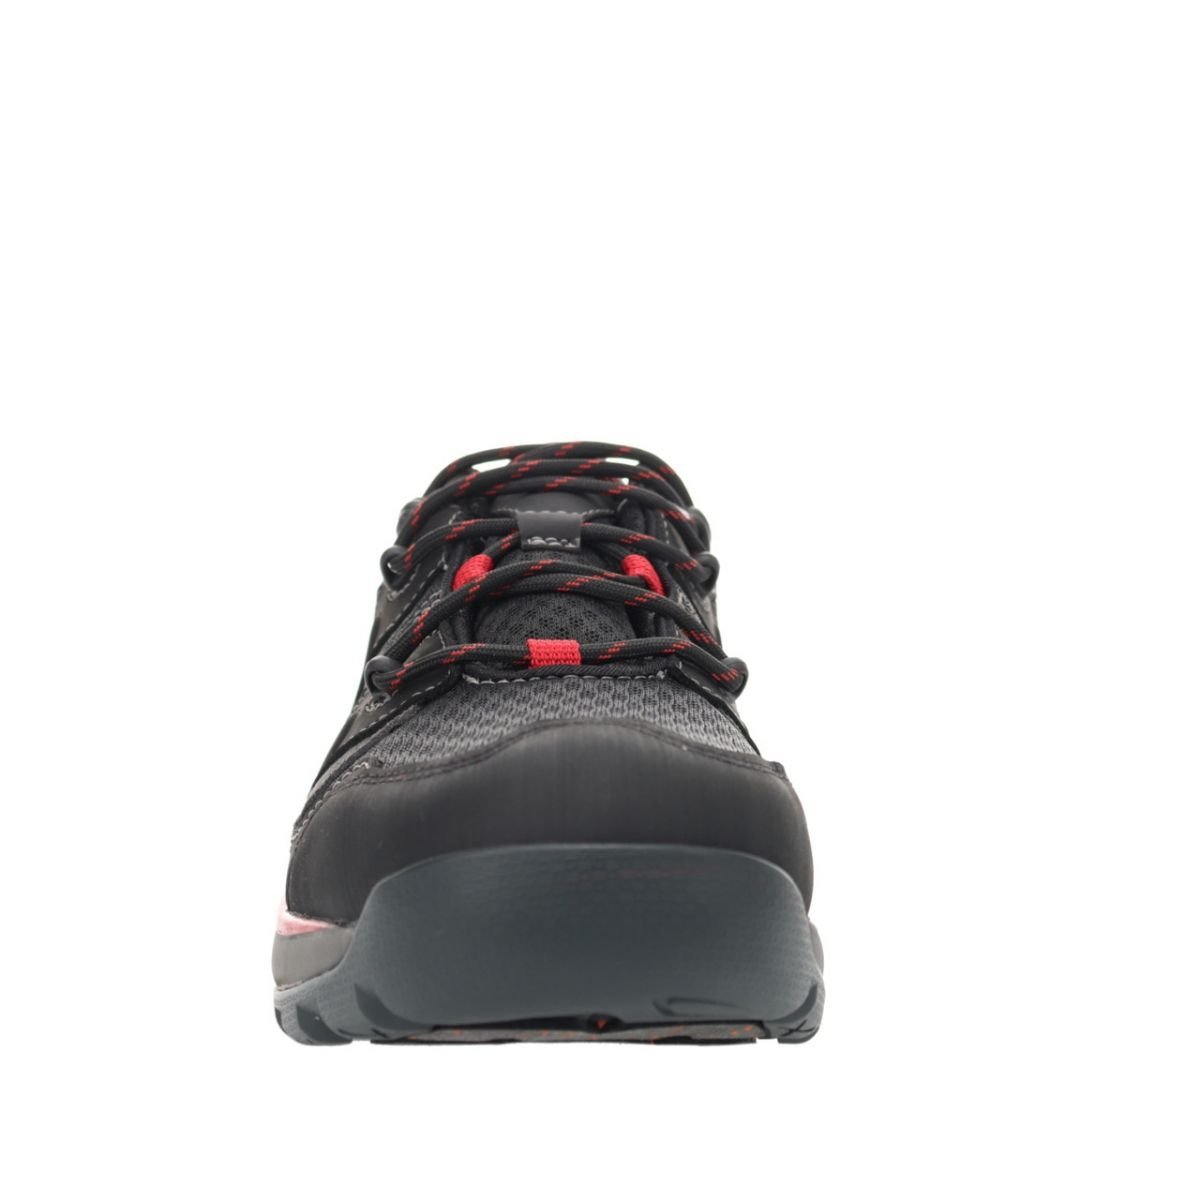 Propet Men's Vercors Hiking Shoe Black/Red - MOA002SBRD BLACK/RED - BLACK/RED, 11